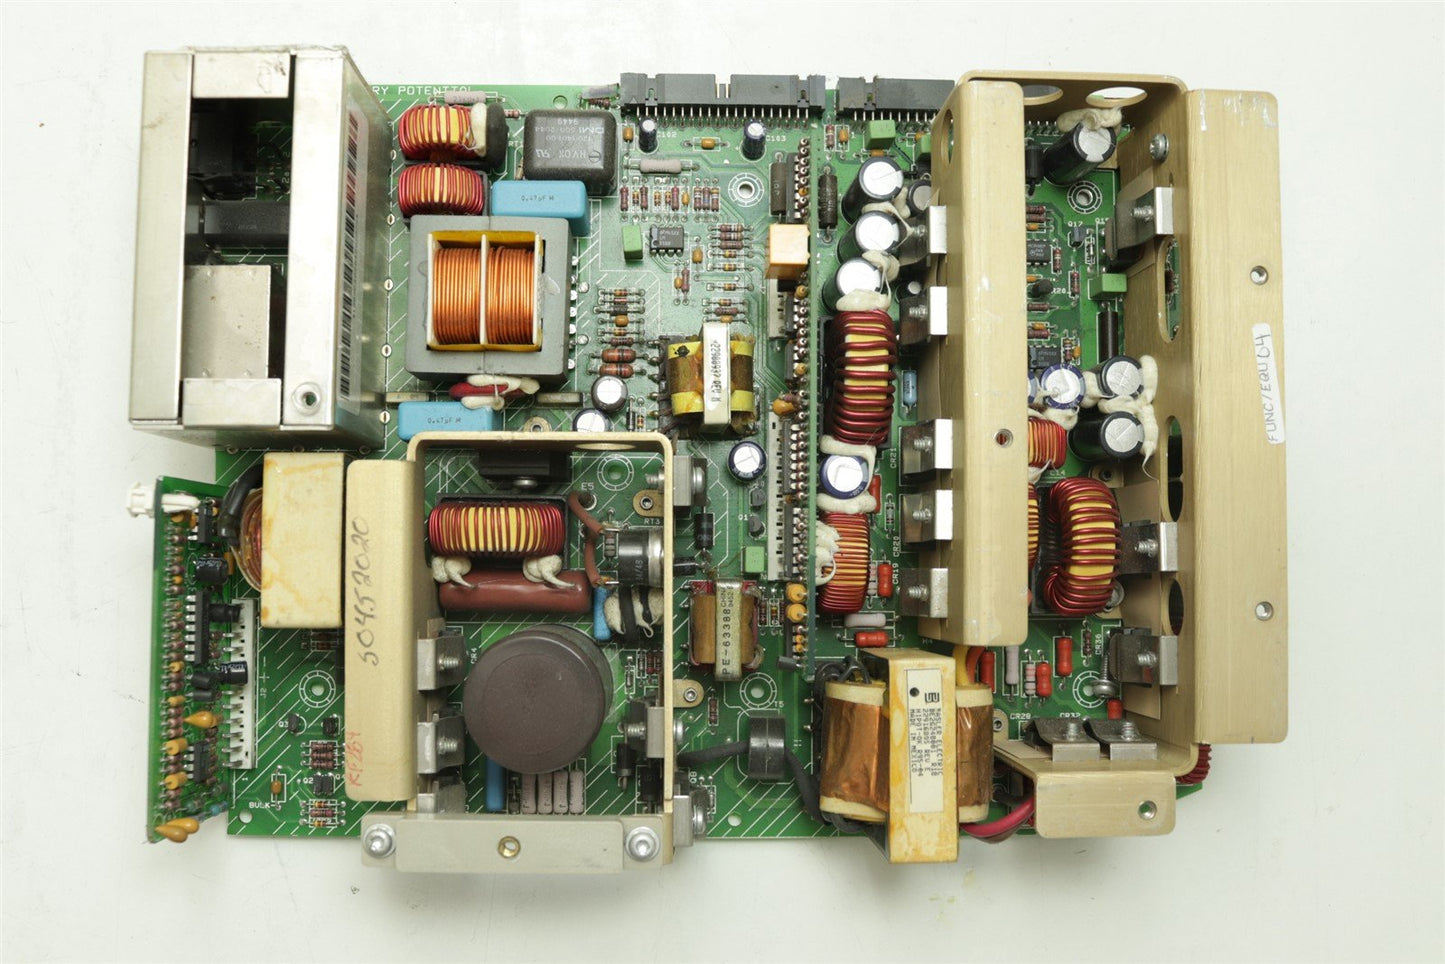 Tektronix TDS 520A Digital Oscilloscope Power Supply Board